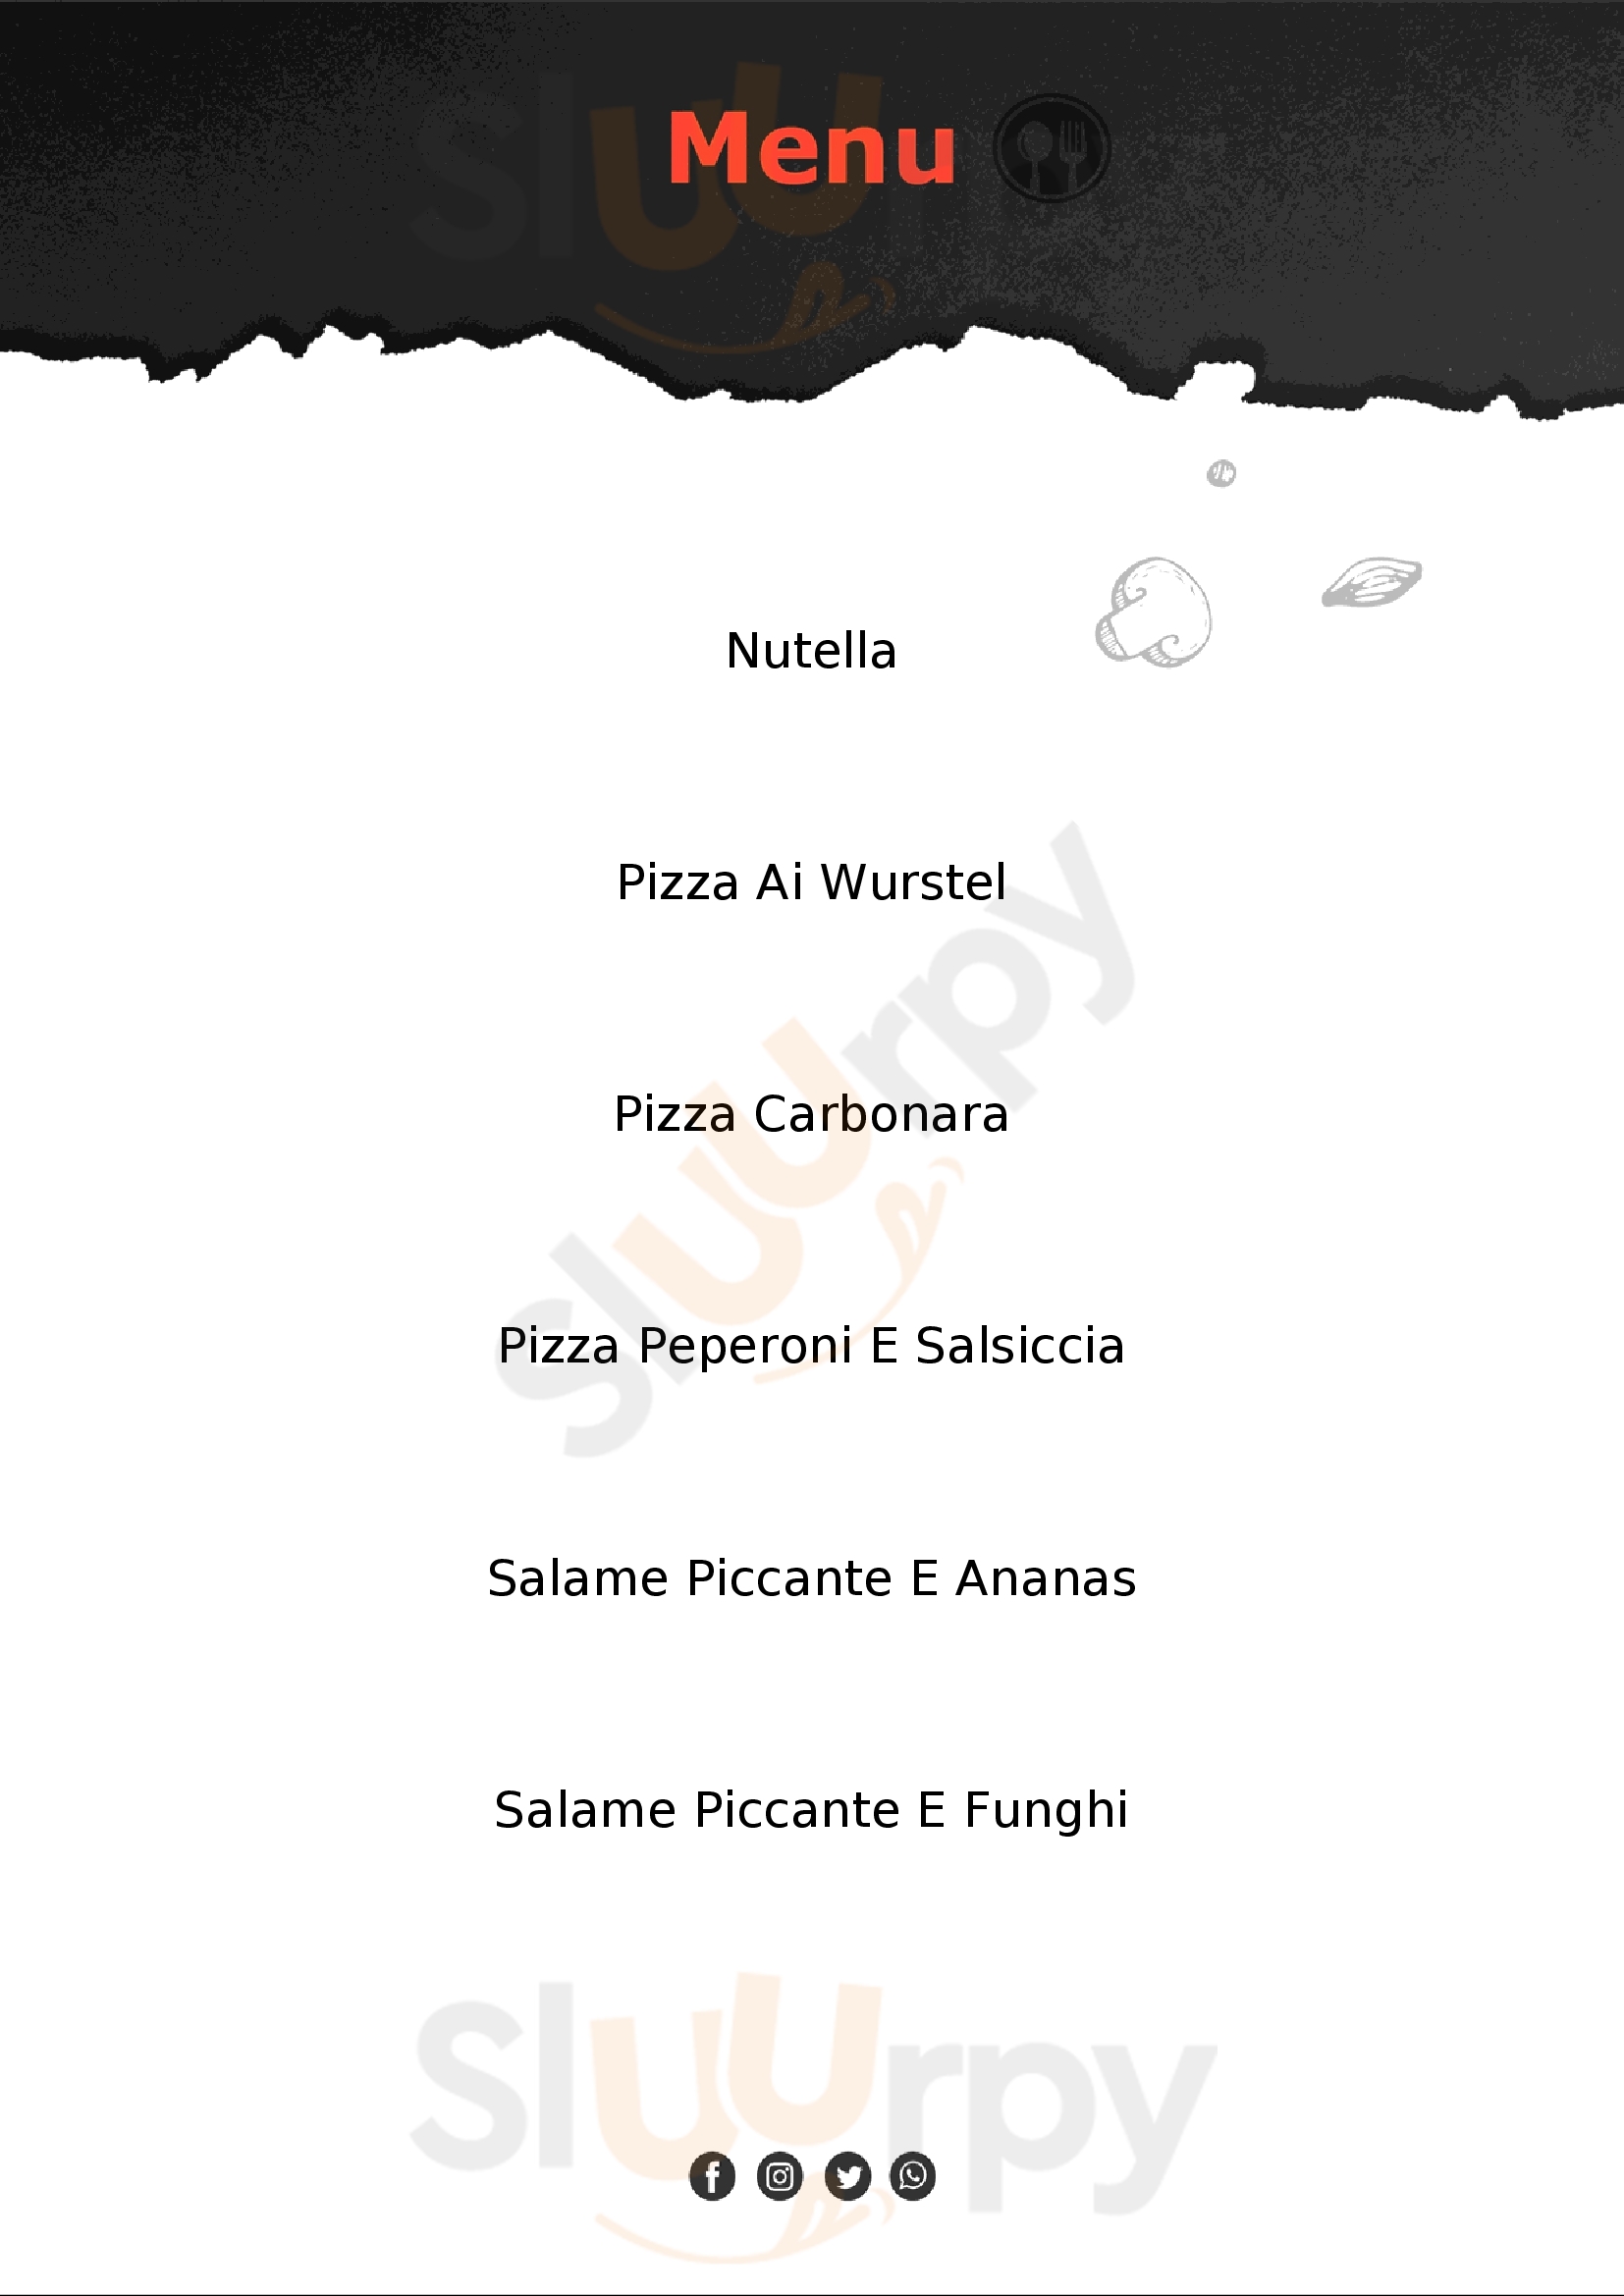 Pummaro Express Pizza a Domicilio Cervia Cervia menù 1 pagina